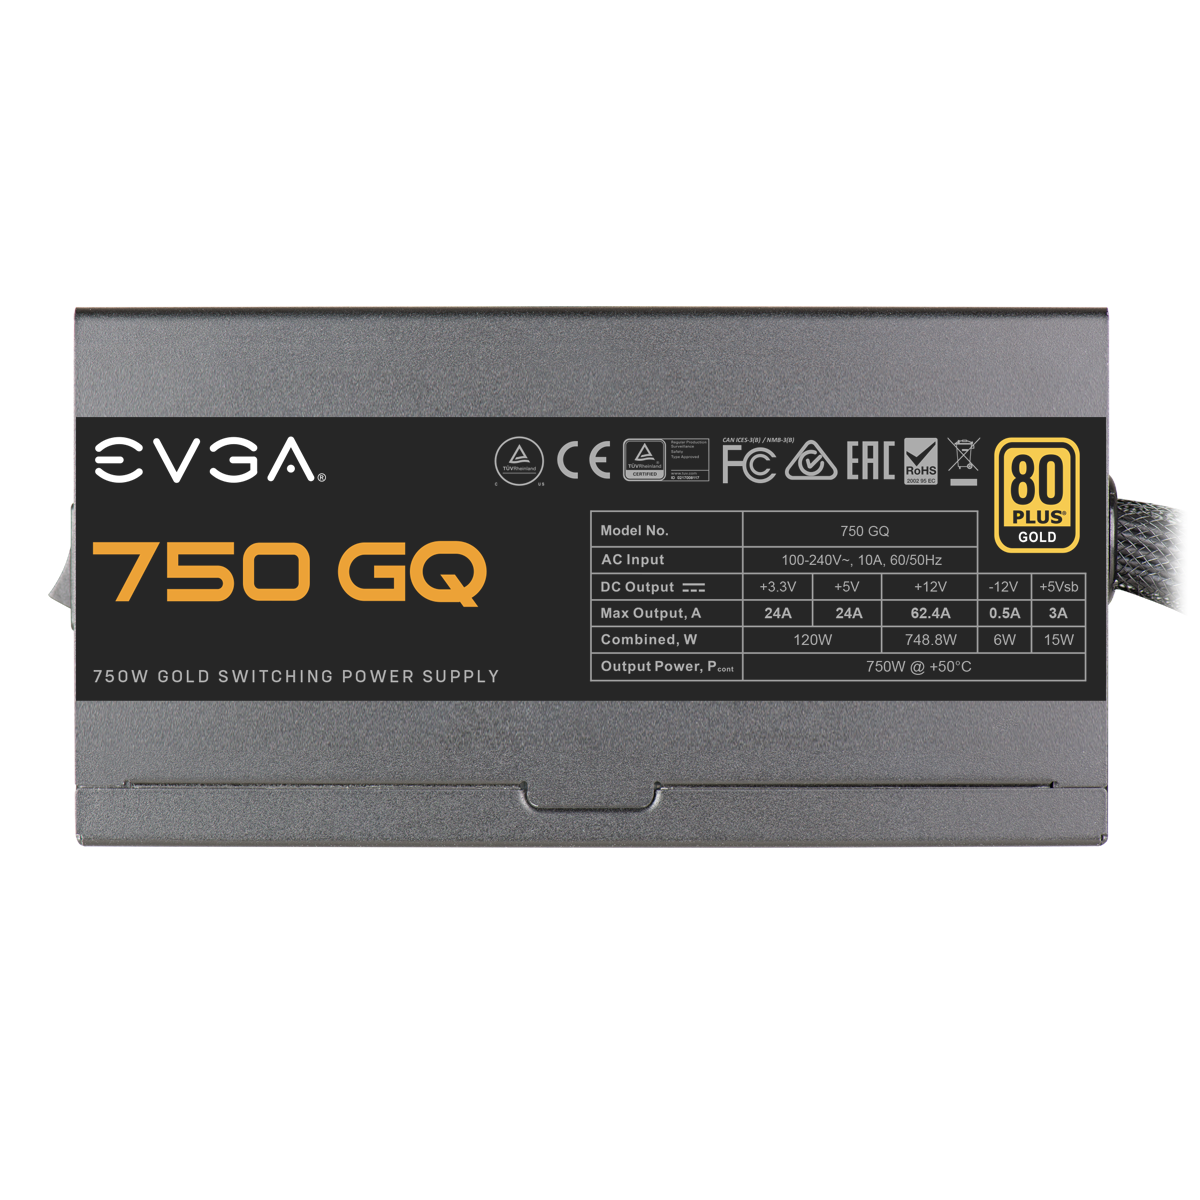 EVGA - EU - Products - EVGA 750 GQ, 80+ GOLD 750W, Semi Modular, EVGA ECO  Mode, 5 Year Warranty, Power Supply 210-GQ-0750-V2 (EU) - 210-GQ-0750-V2